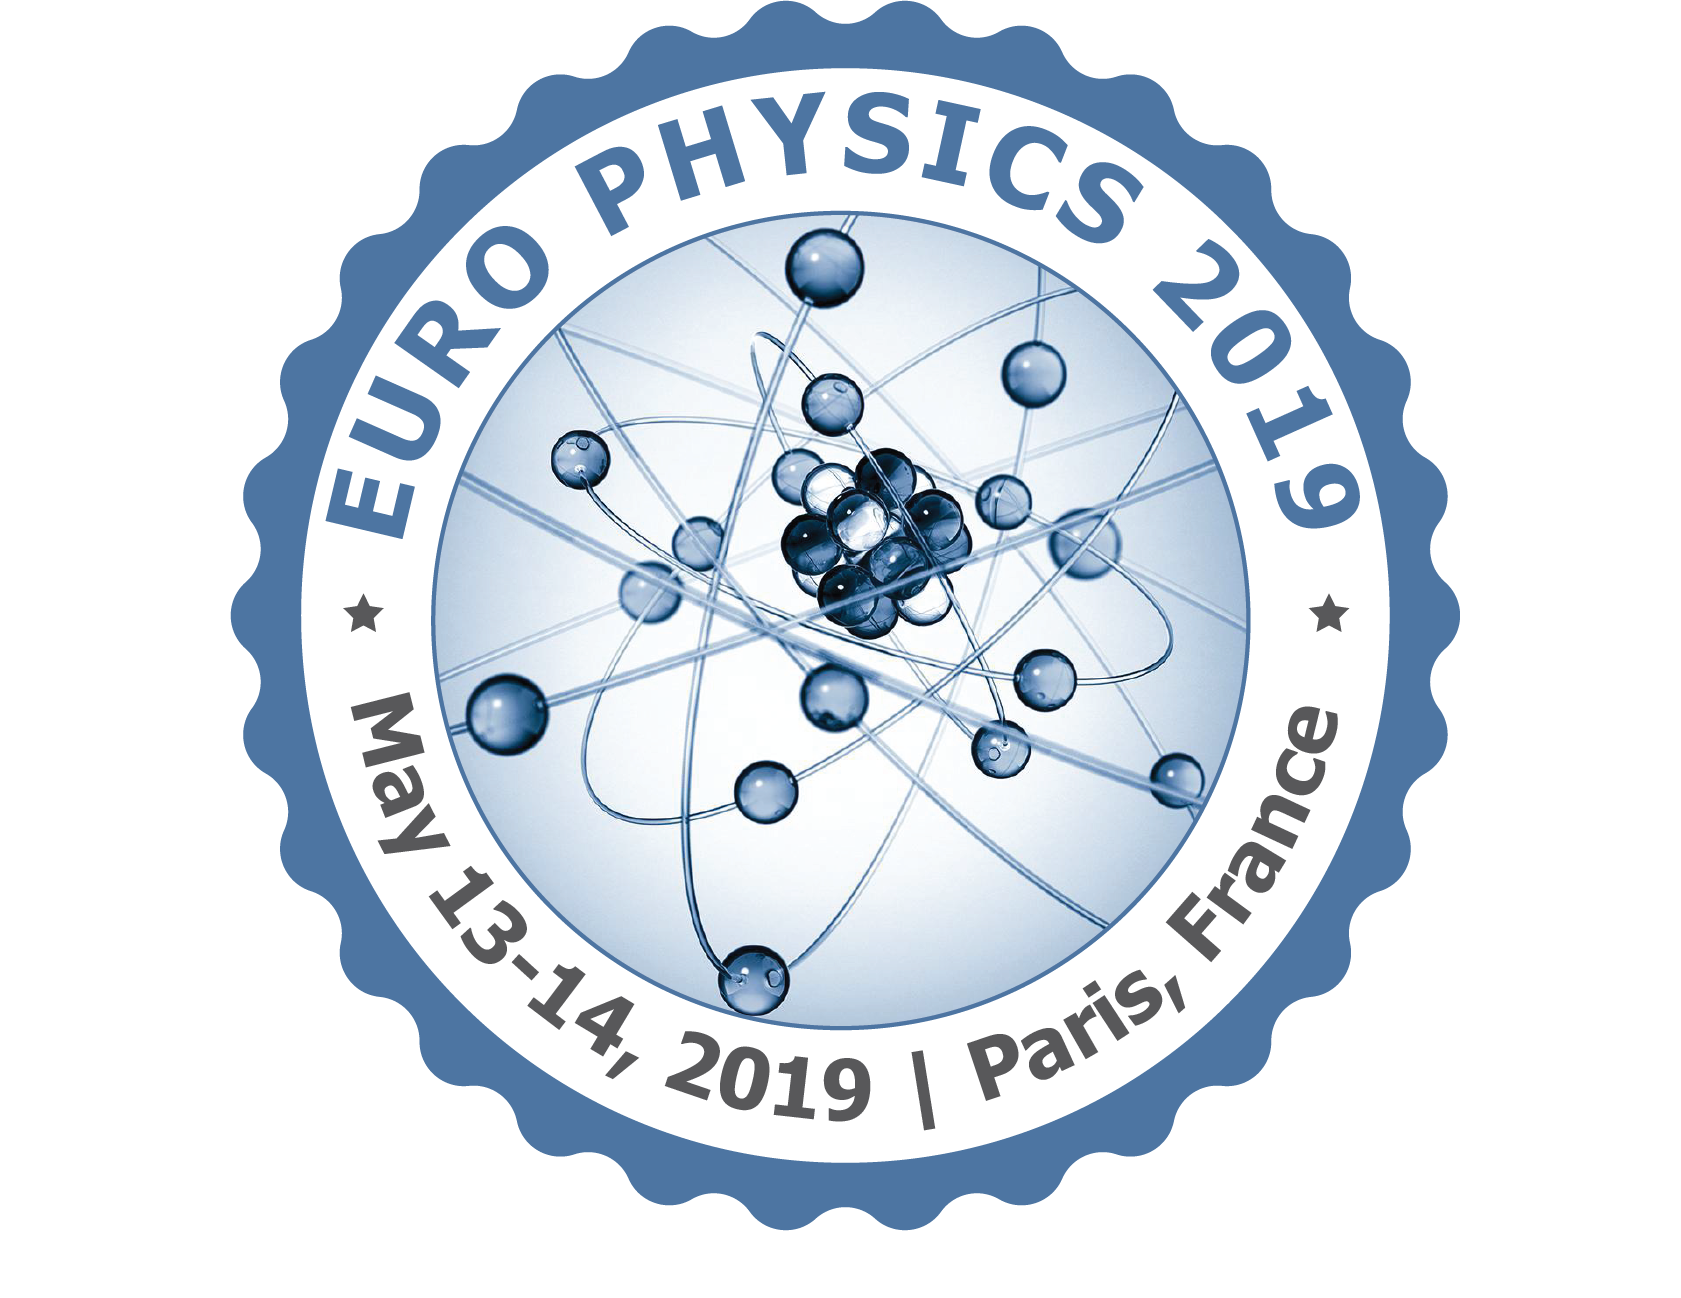 6th World Congress on Physics